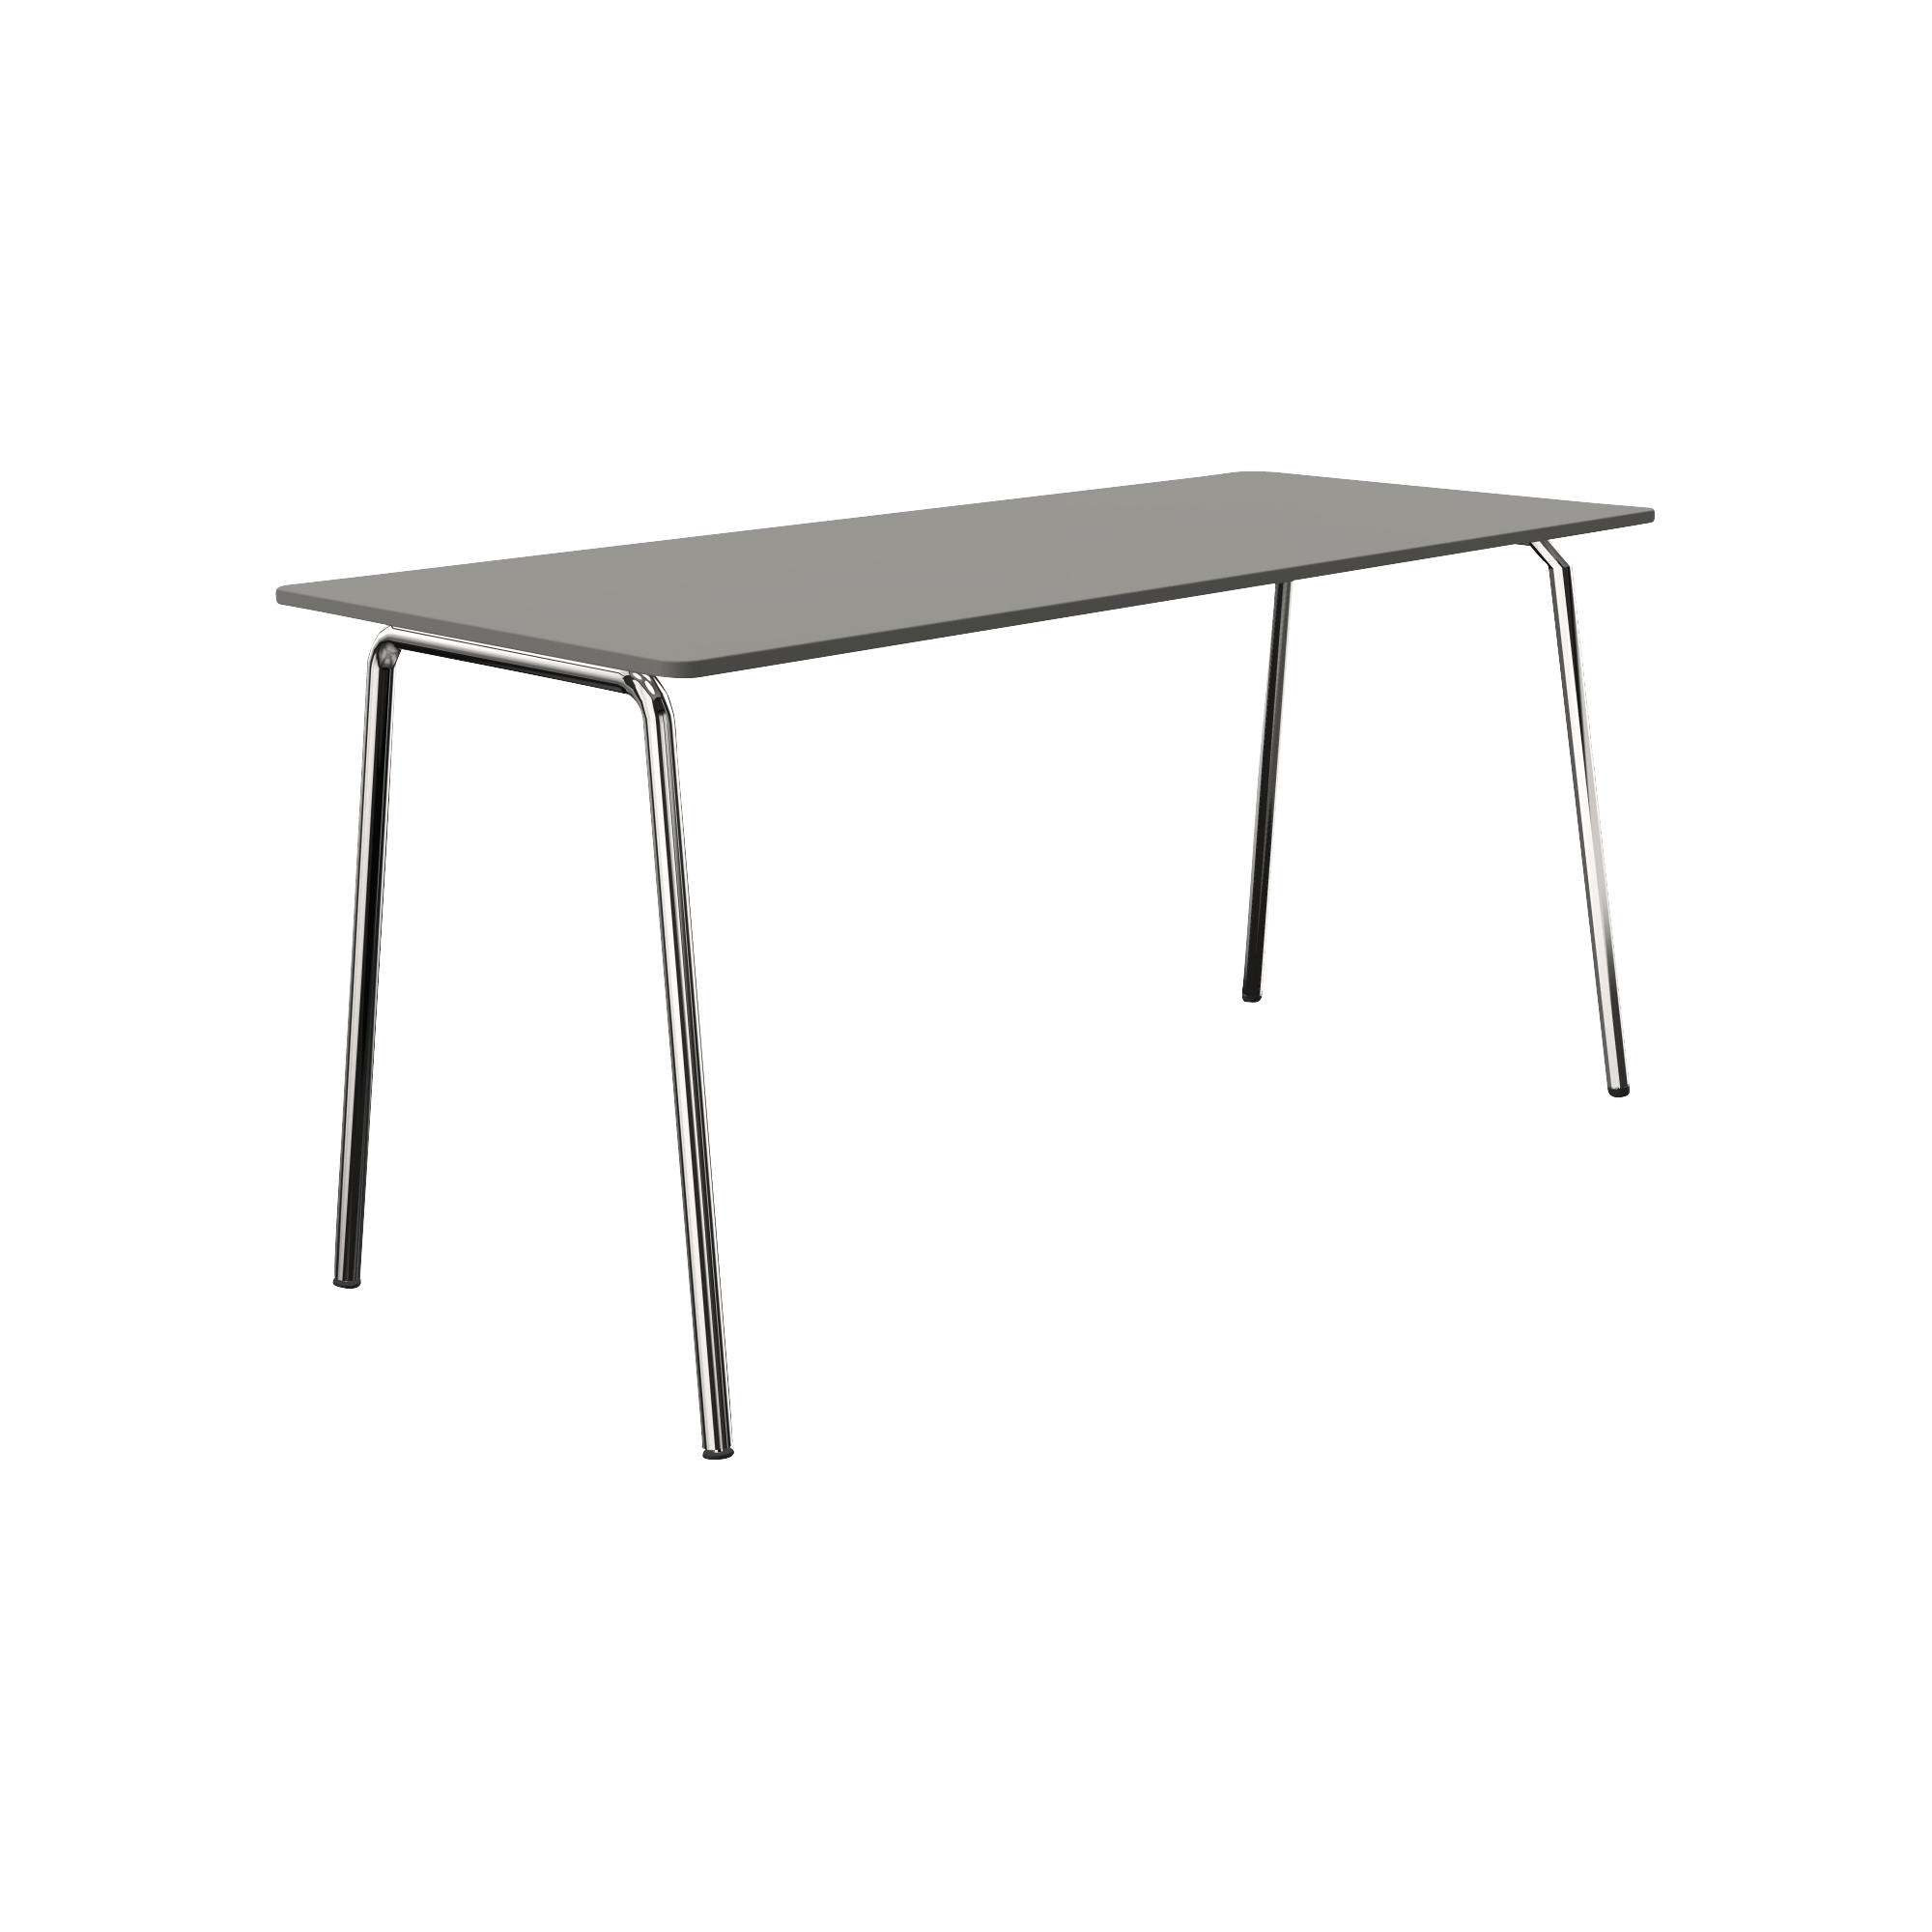 Grey, long rectangular table with 4 chrome legs